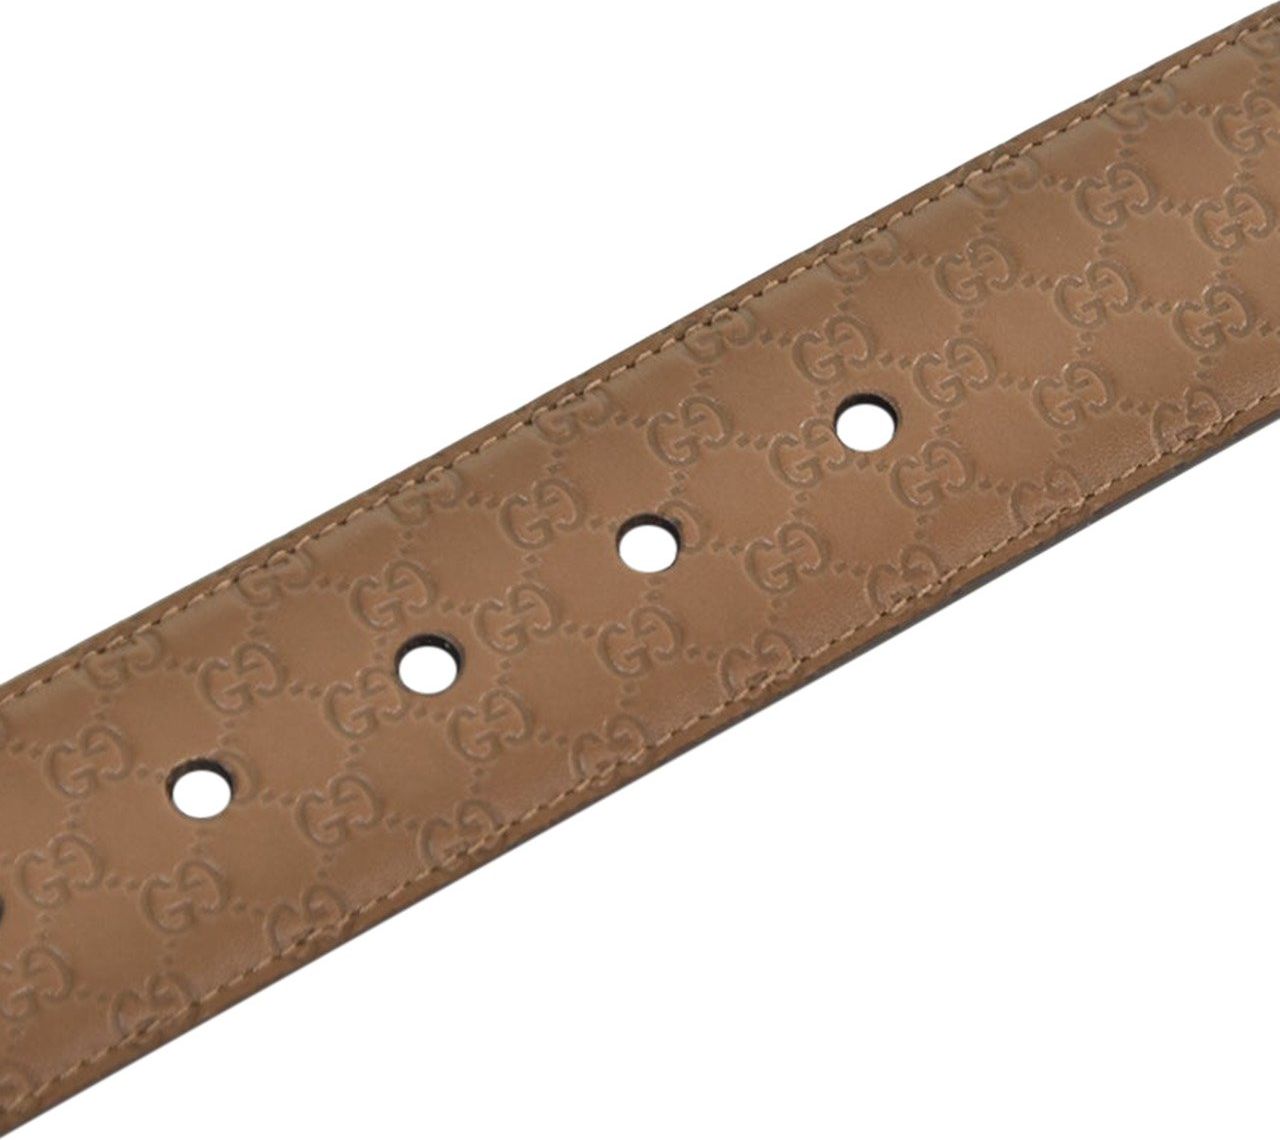 Gucci Gucci Belt Maple Man Micro-Greasy Leather Mod. 449716 BMJ0N 014 2527 Bruin